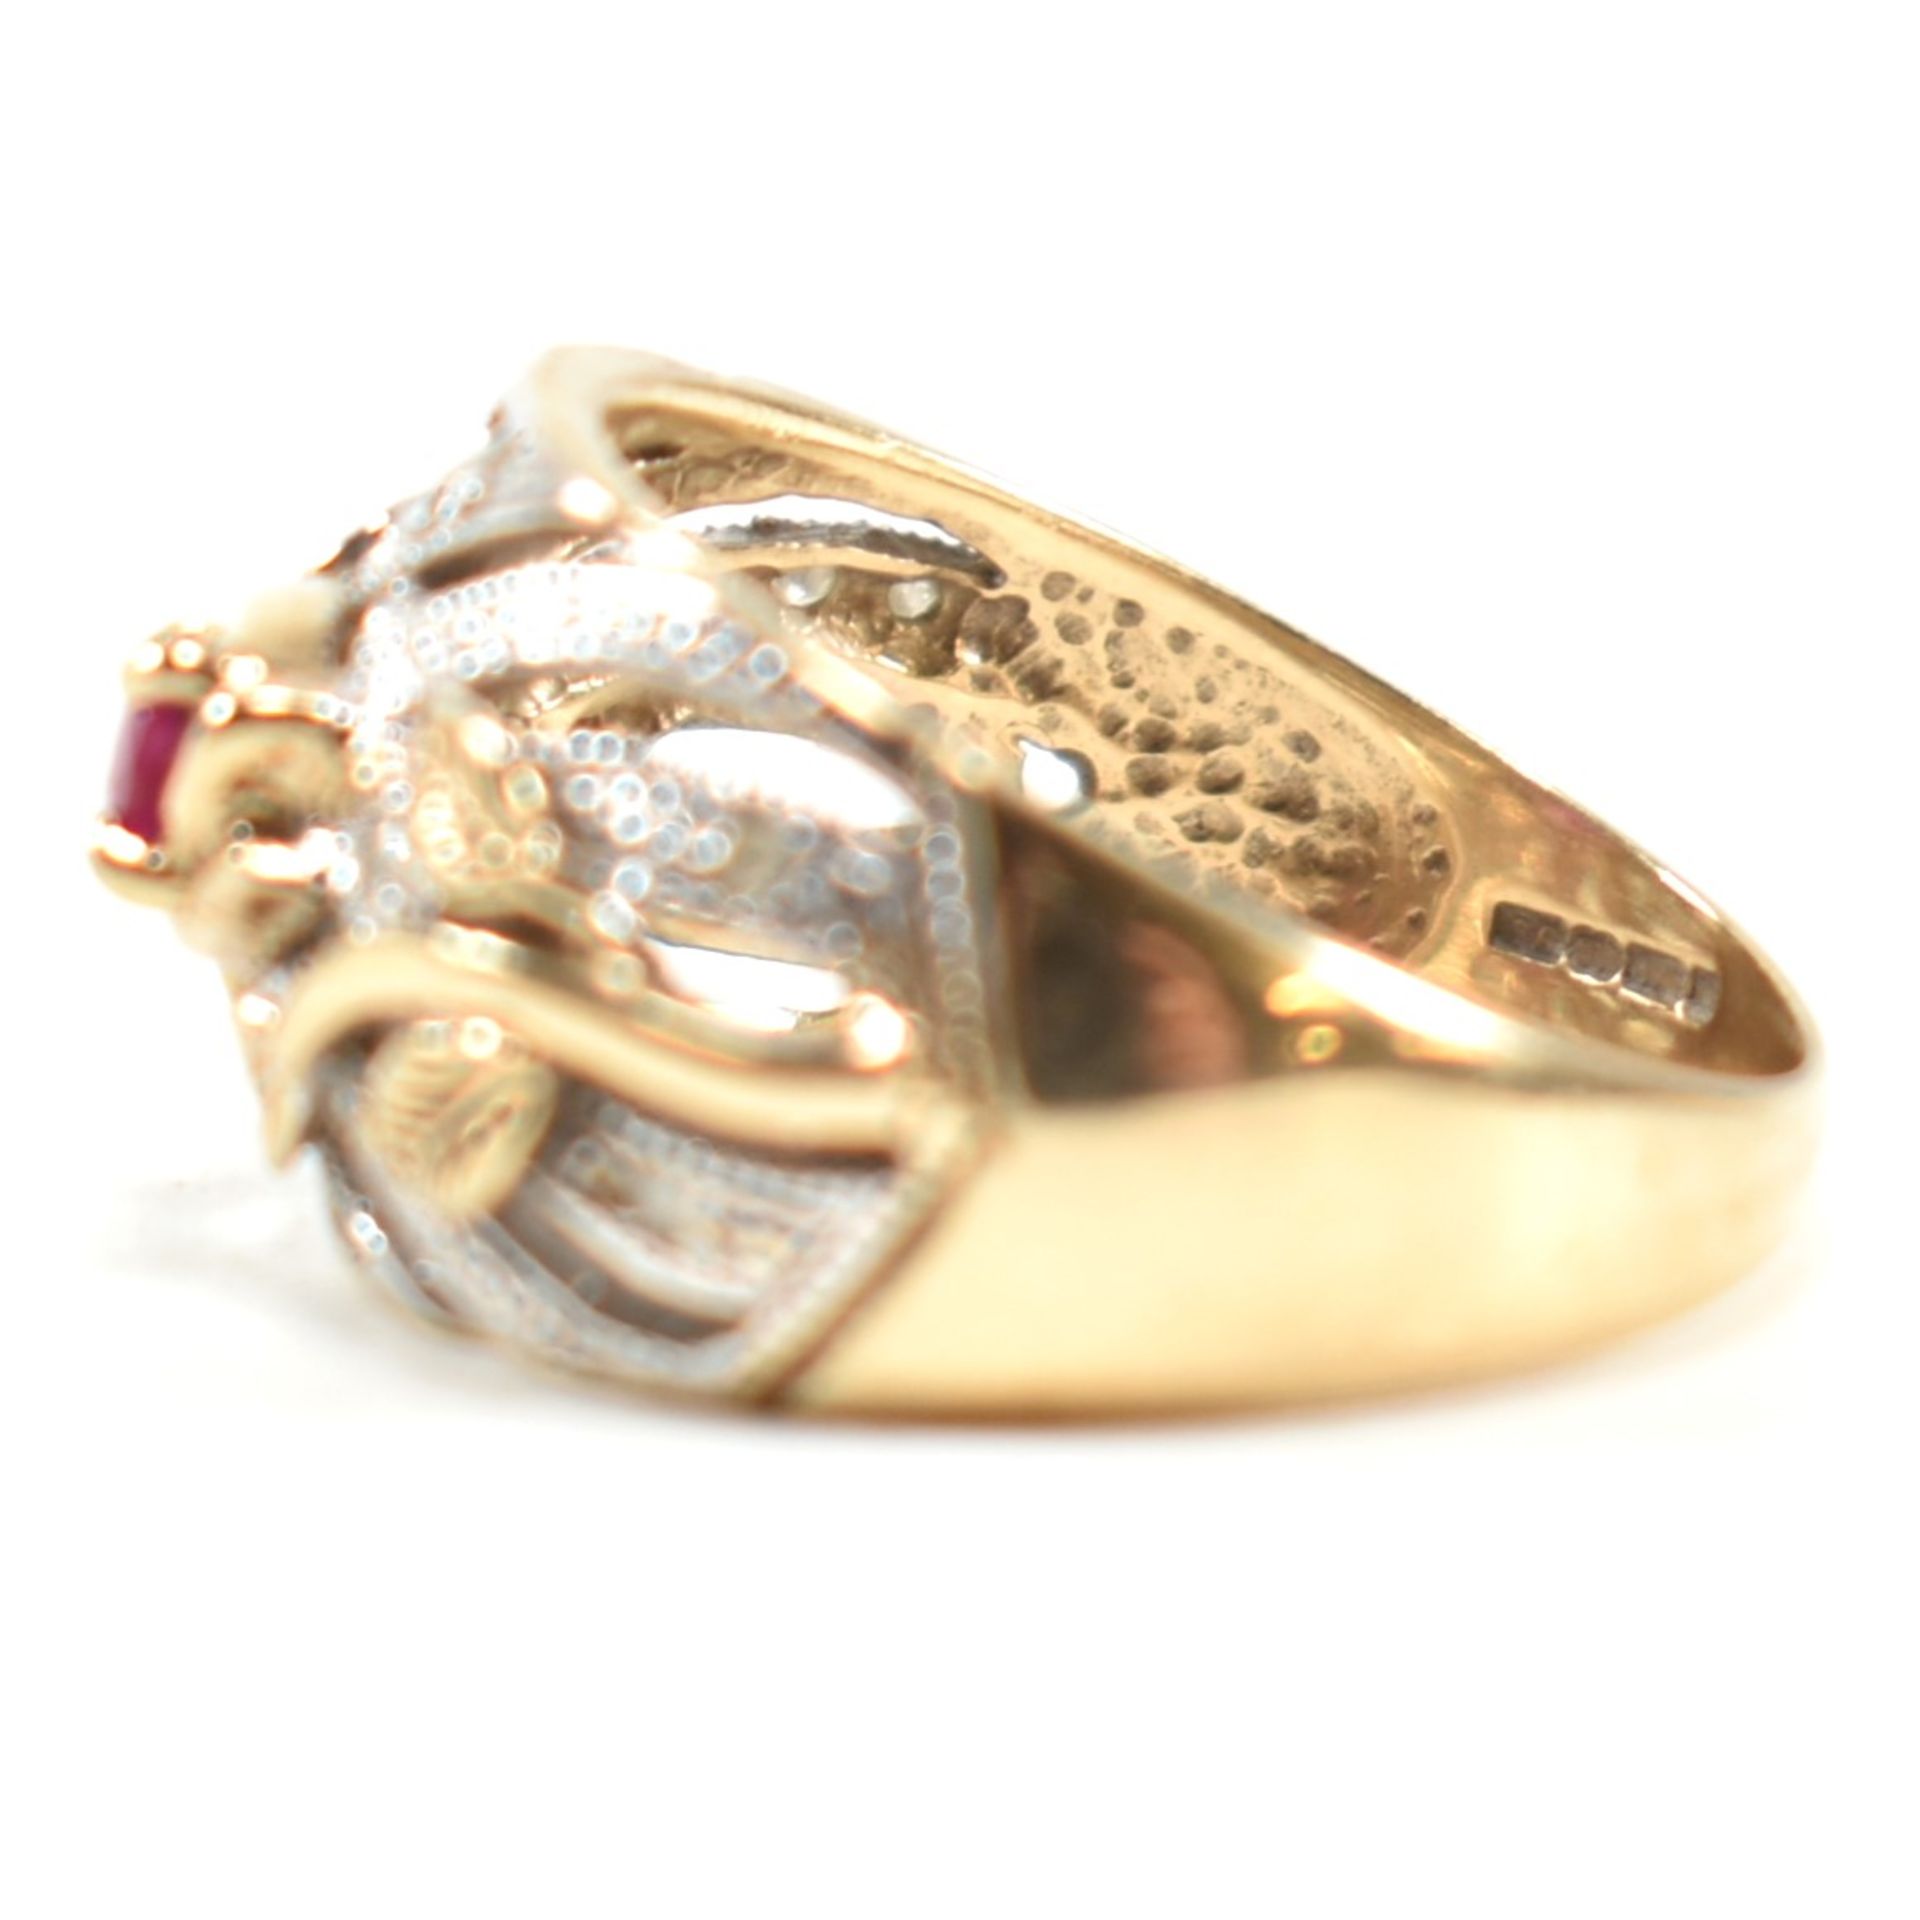 HALLMARKED 9CT GOLD RUBY & DIAMOND RING - Image 7 of 9